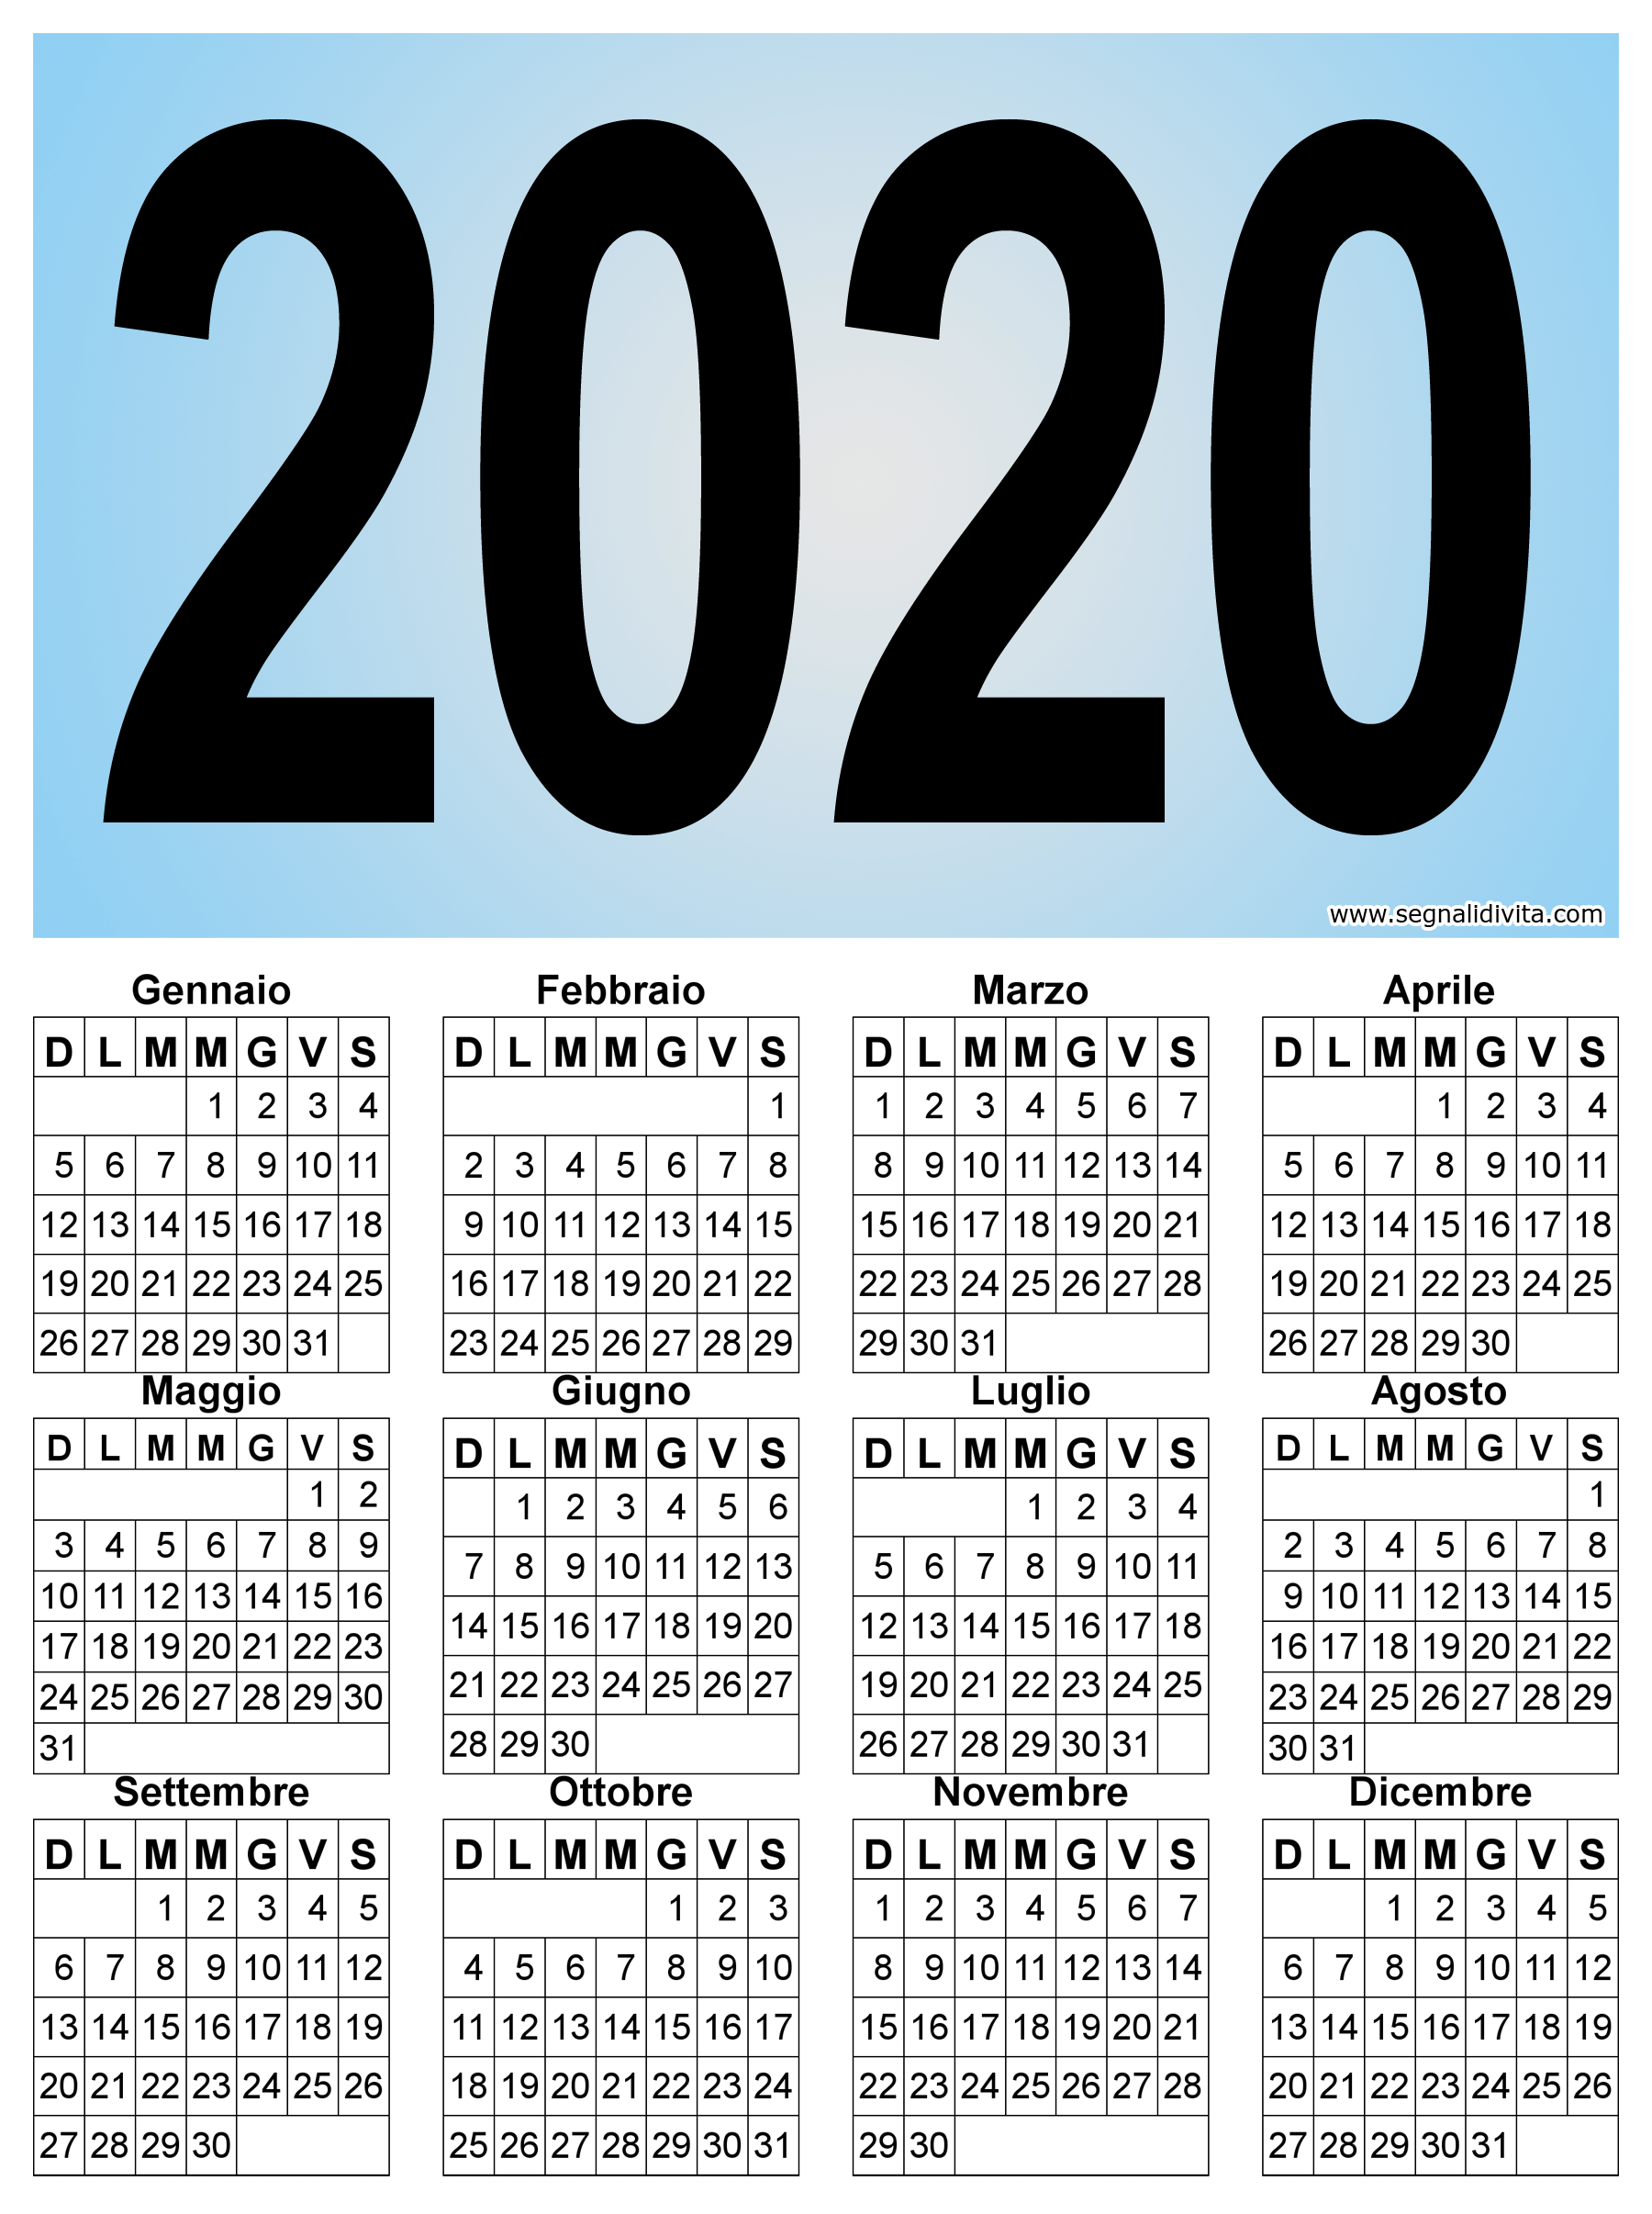 Calendario 2020 grande: 1800 x 2412 pixel